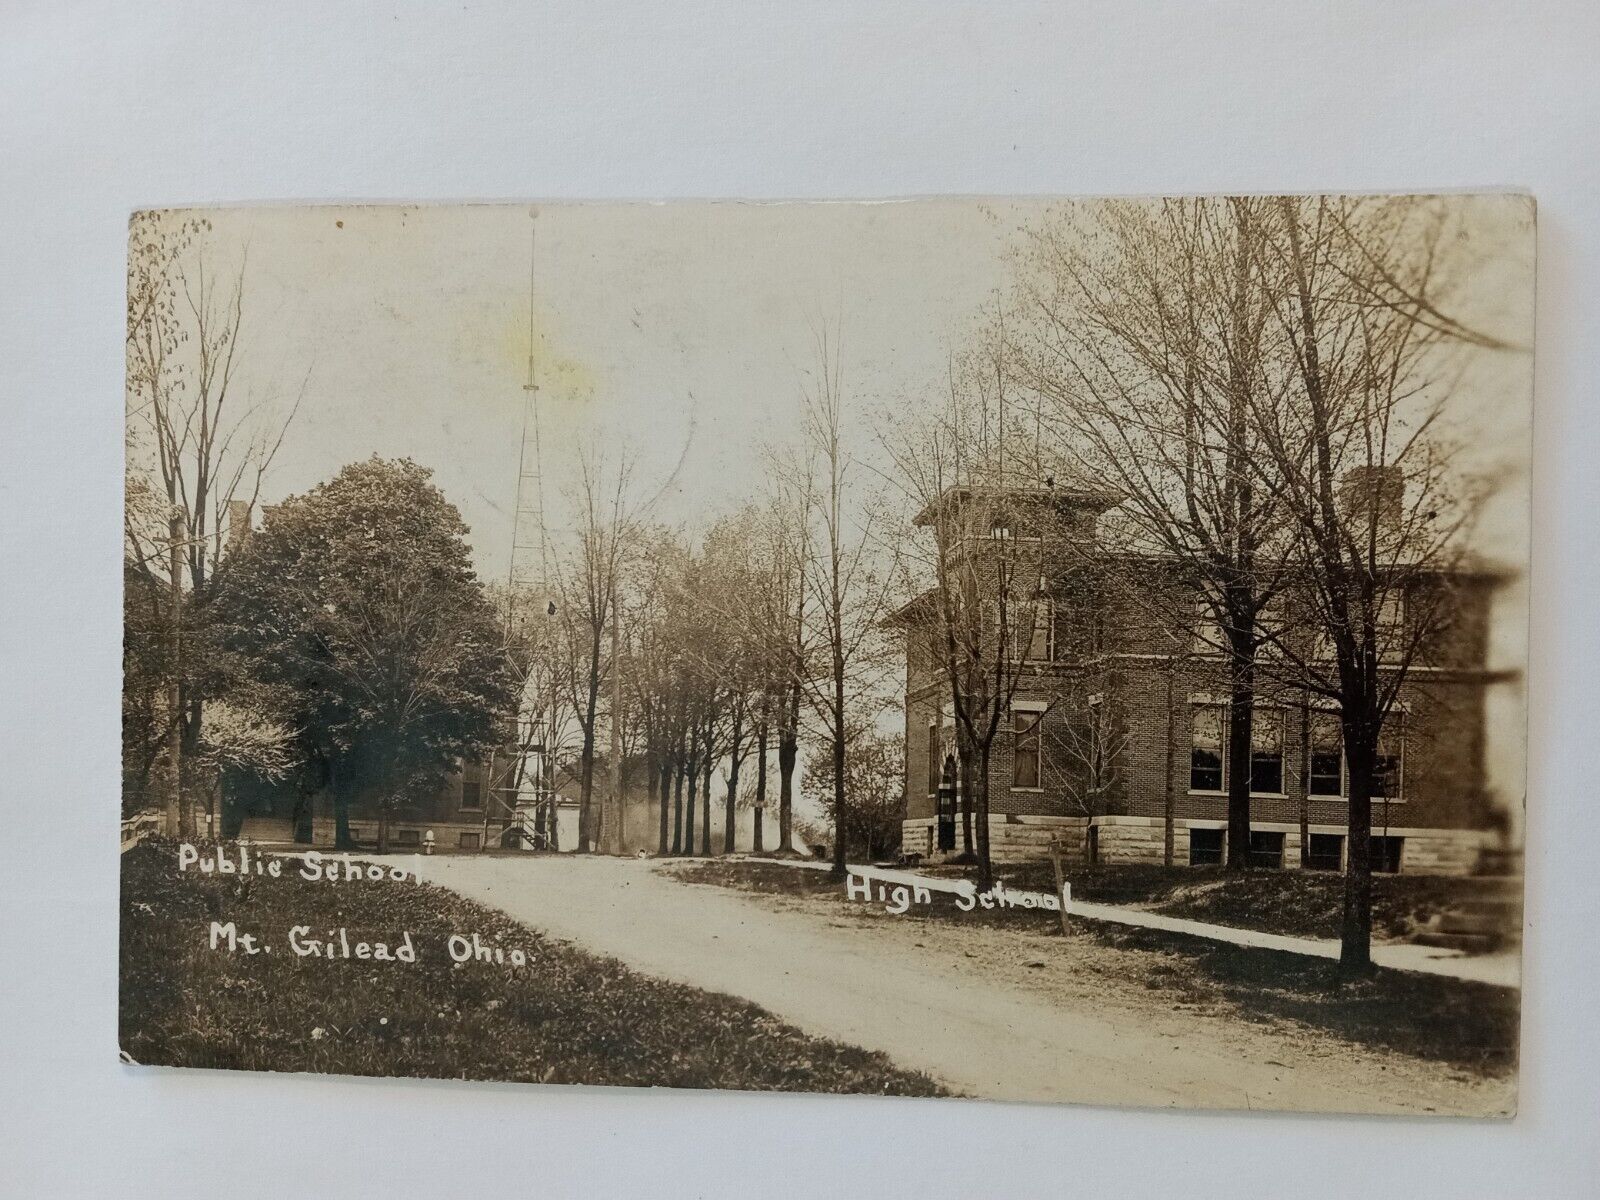 MT GILEAD OHIO OH REAL PHOTO POSTCARD 1910 ERA RPPC PUBLIC + HIGH SCHOOL